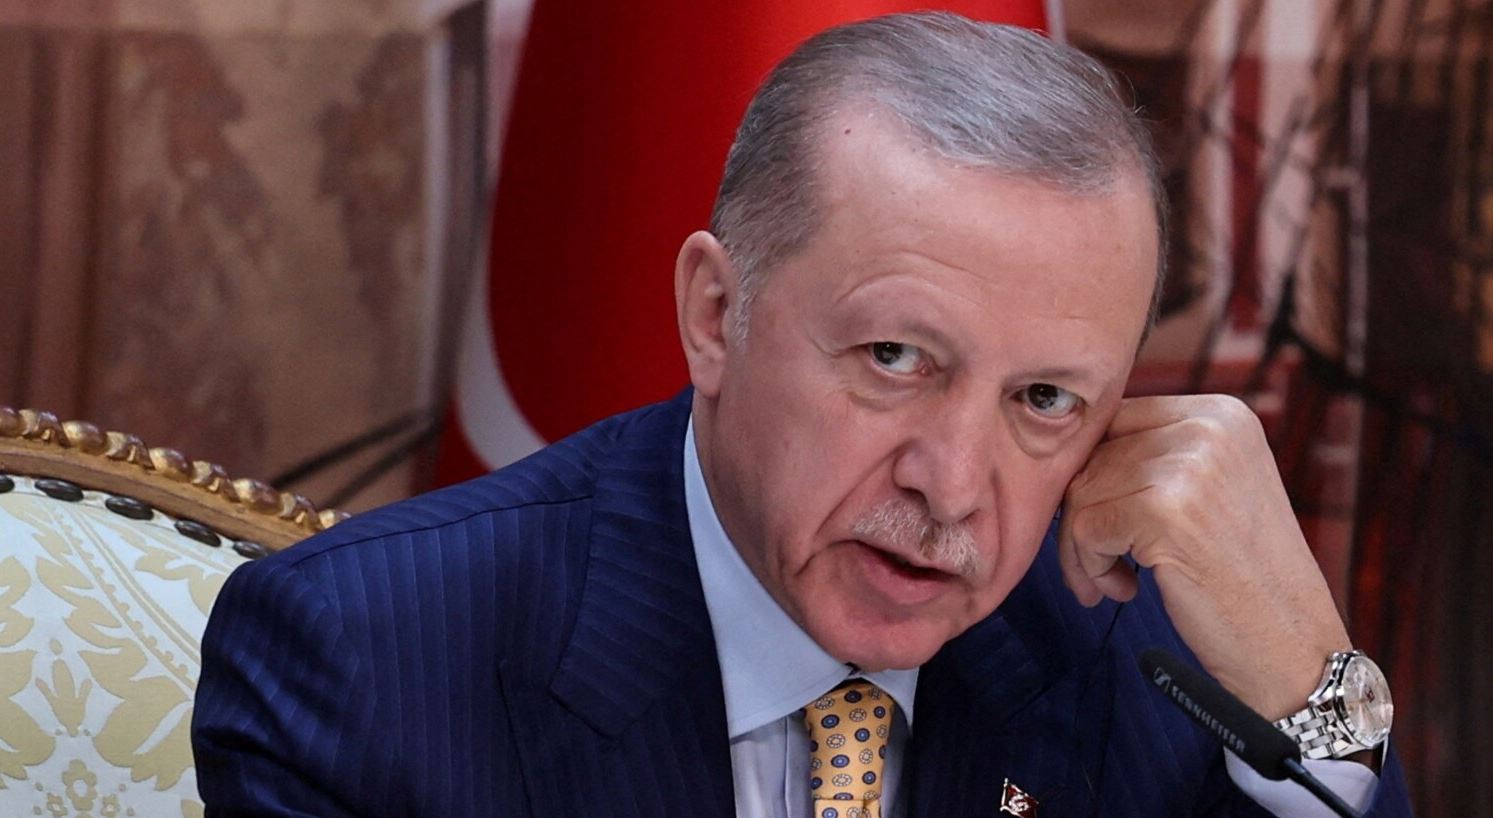 presidenti turk erdogan do te vizitoje irakun javen e ardhshme cilat jane arsyet